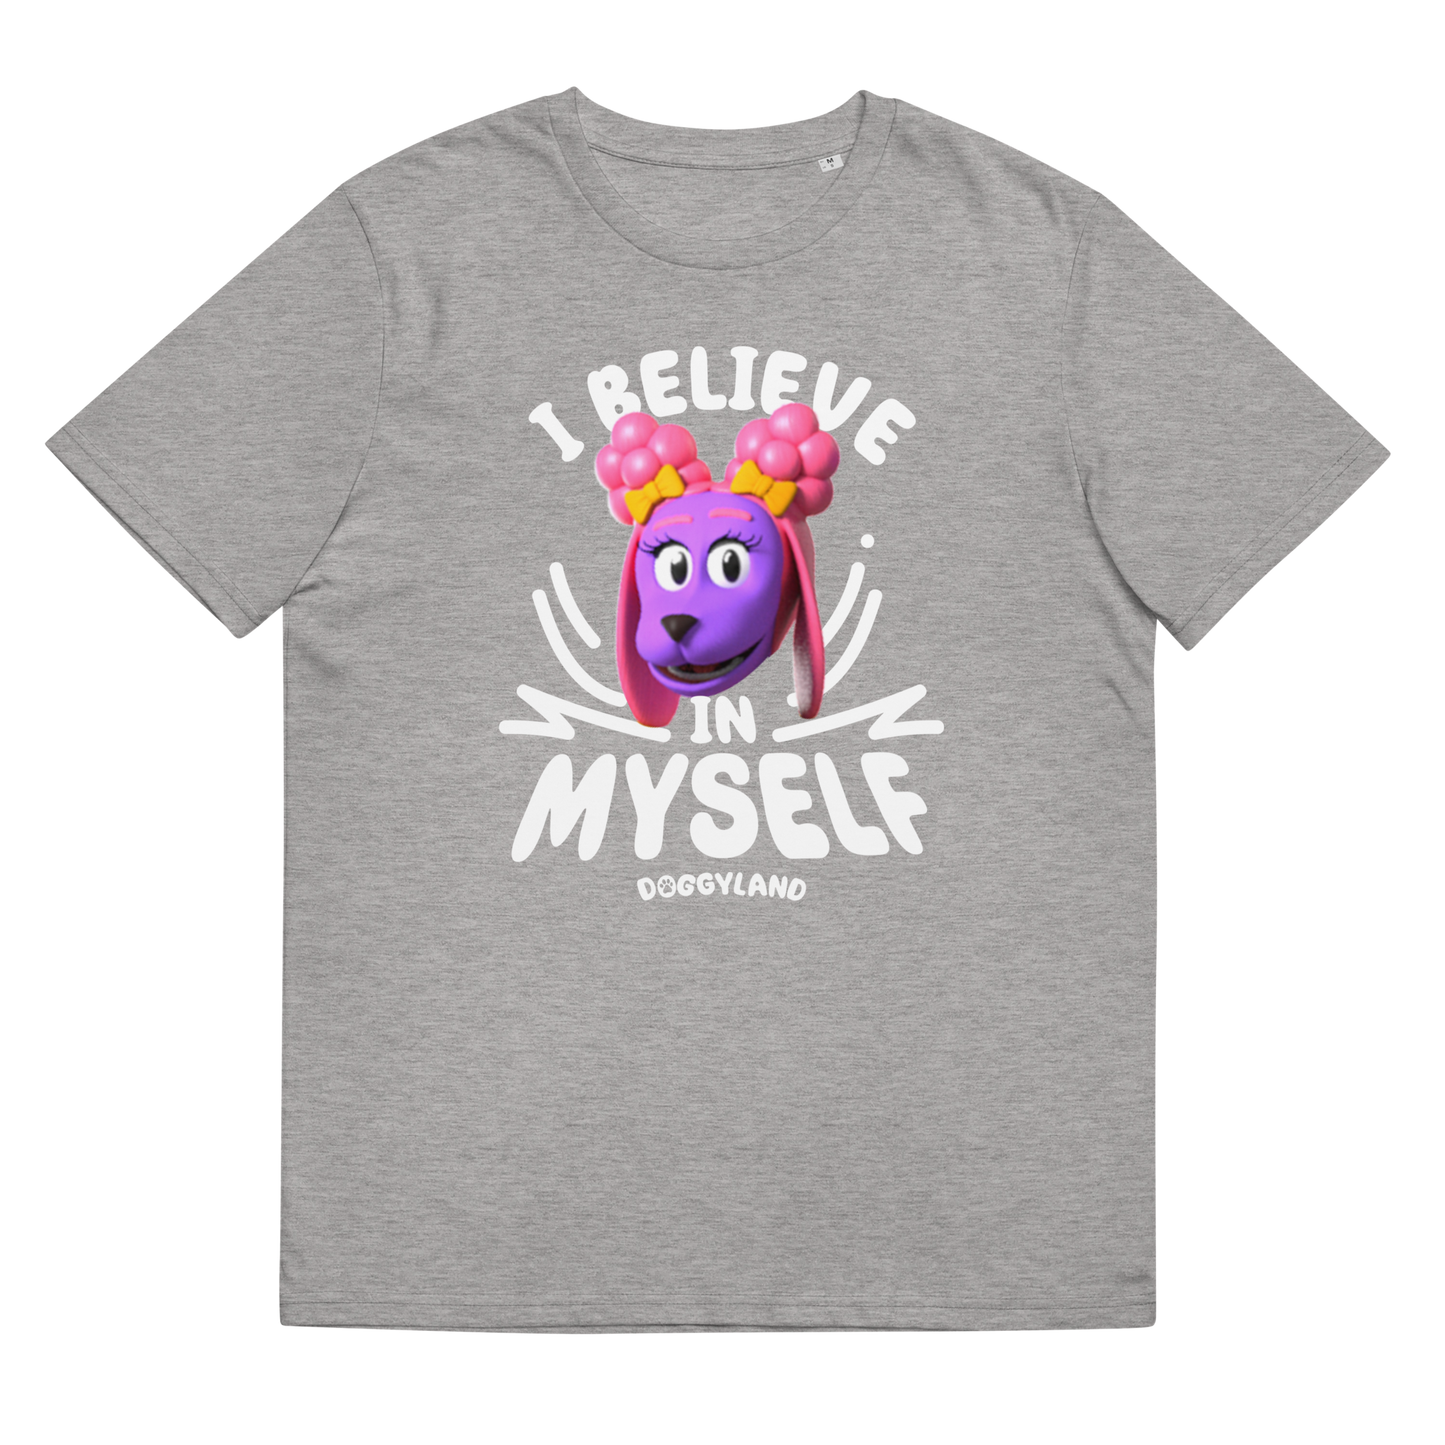 Adult Yap Yap "I Believe In Myself" Affirmation Shirt